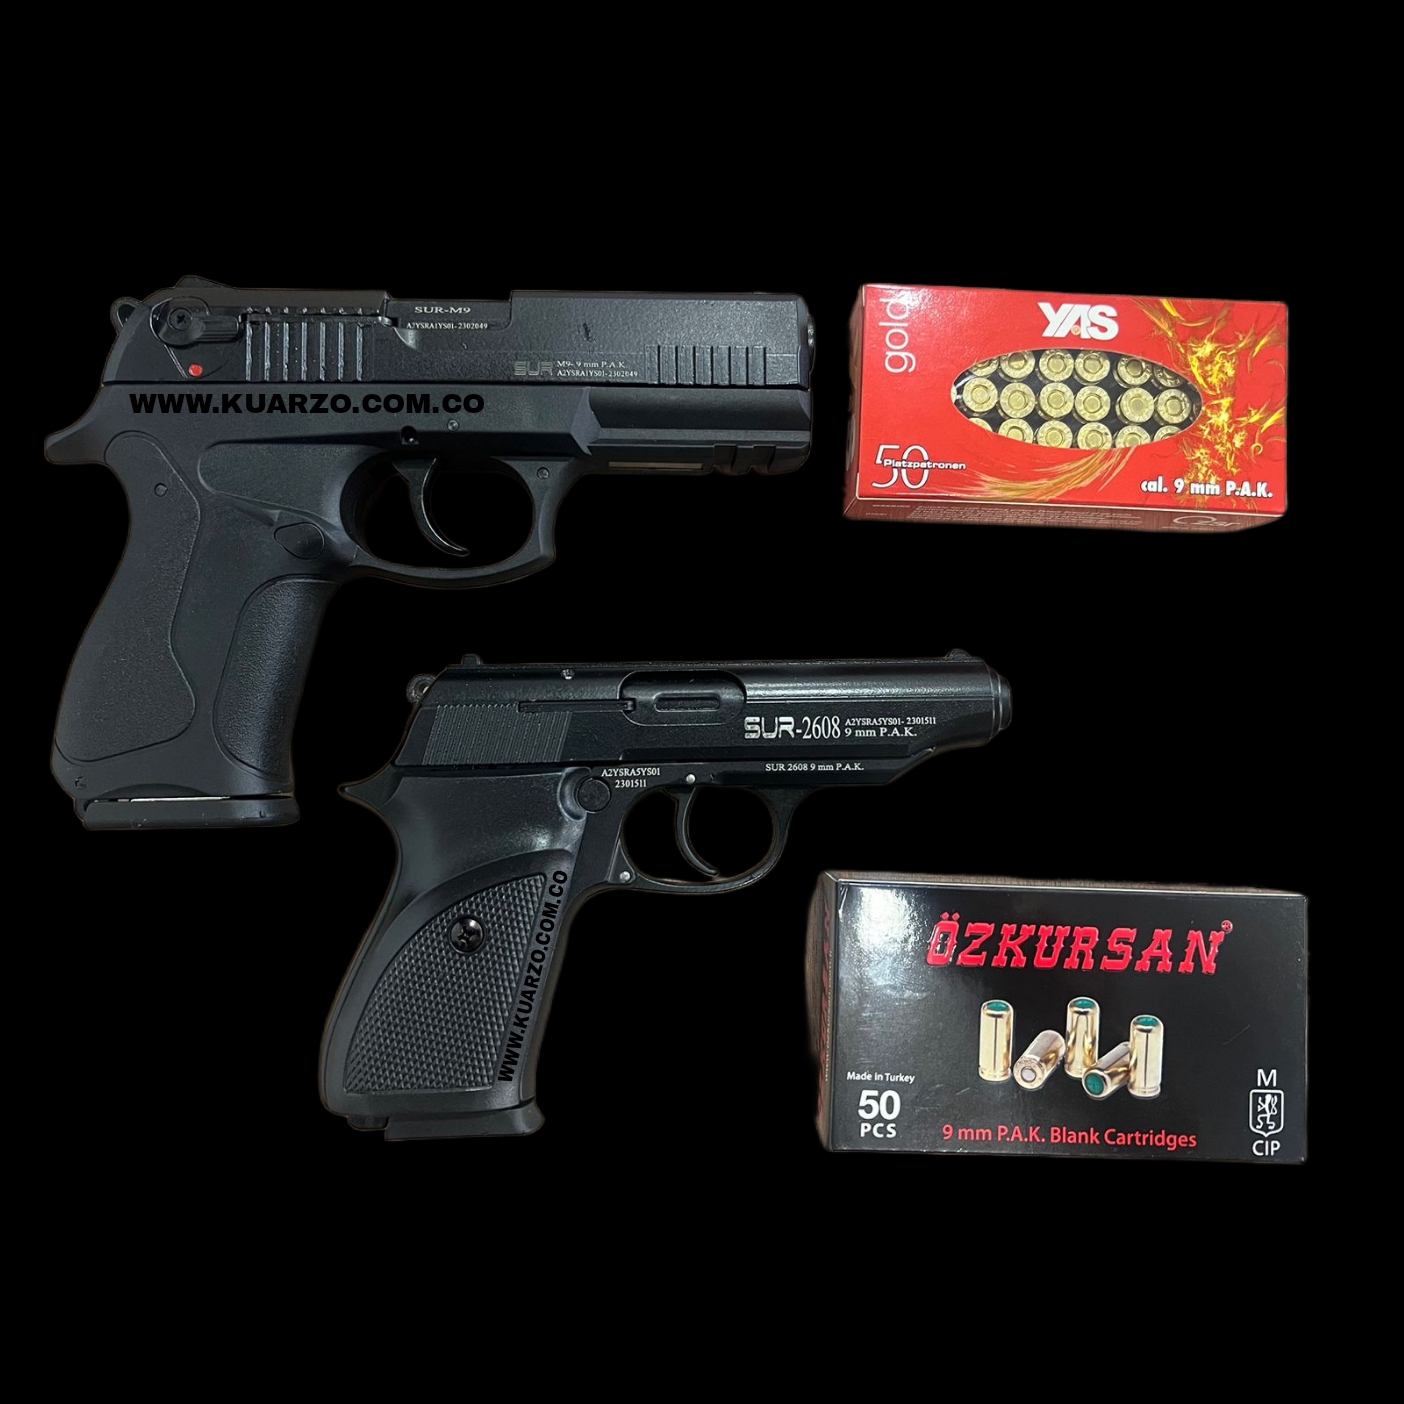 Comprar Zoraki Pistola de fogueo 4918 cromada mate en ASMC